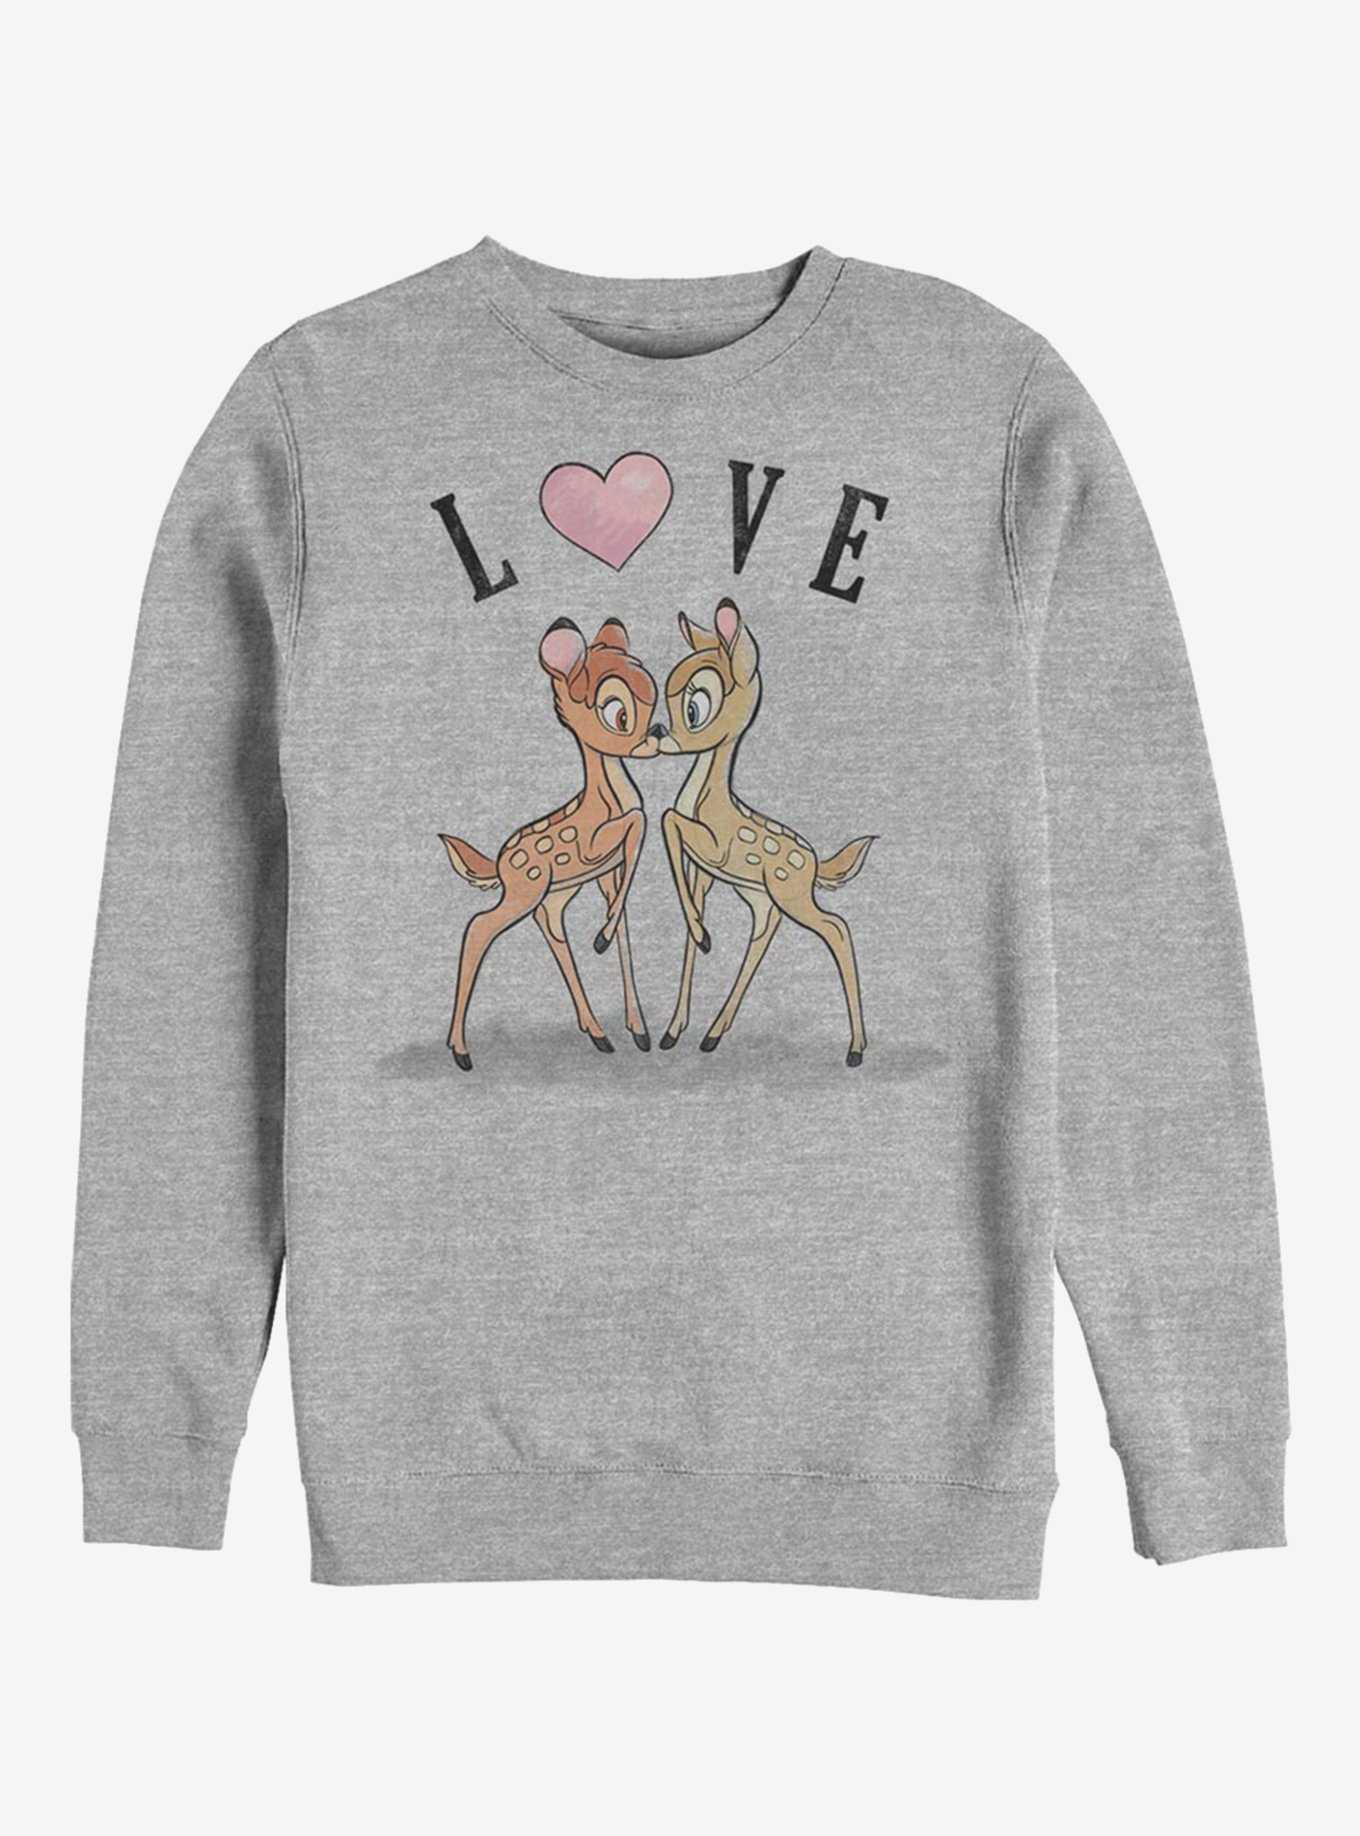 Disney Bambi Love Crew Sweatshirt, , hi-res